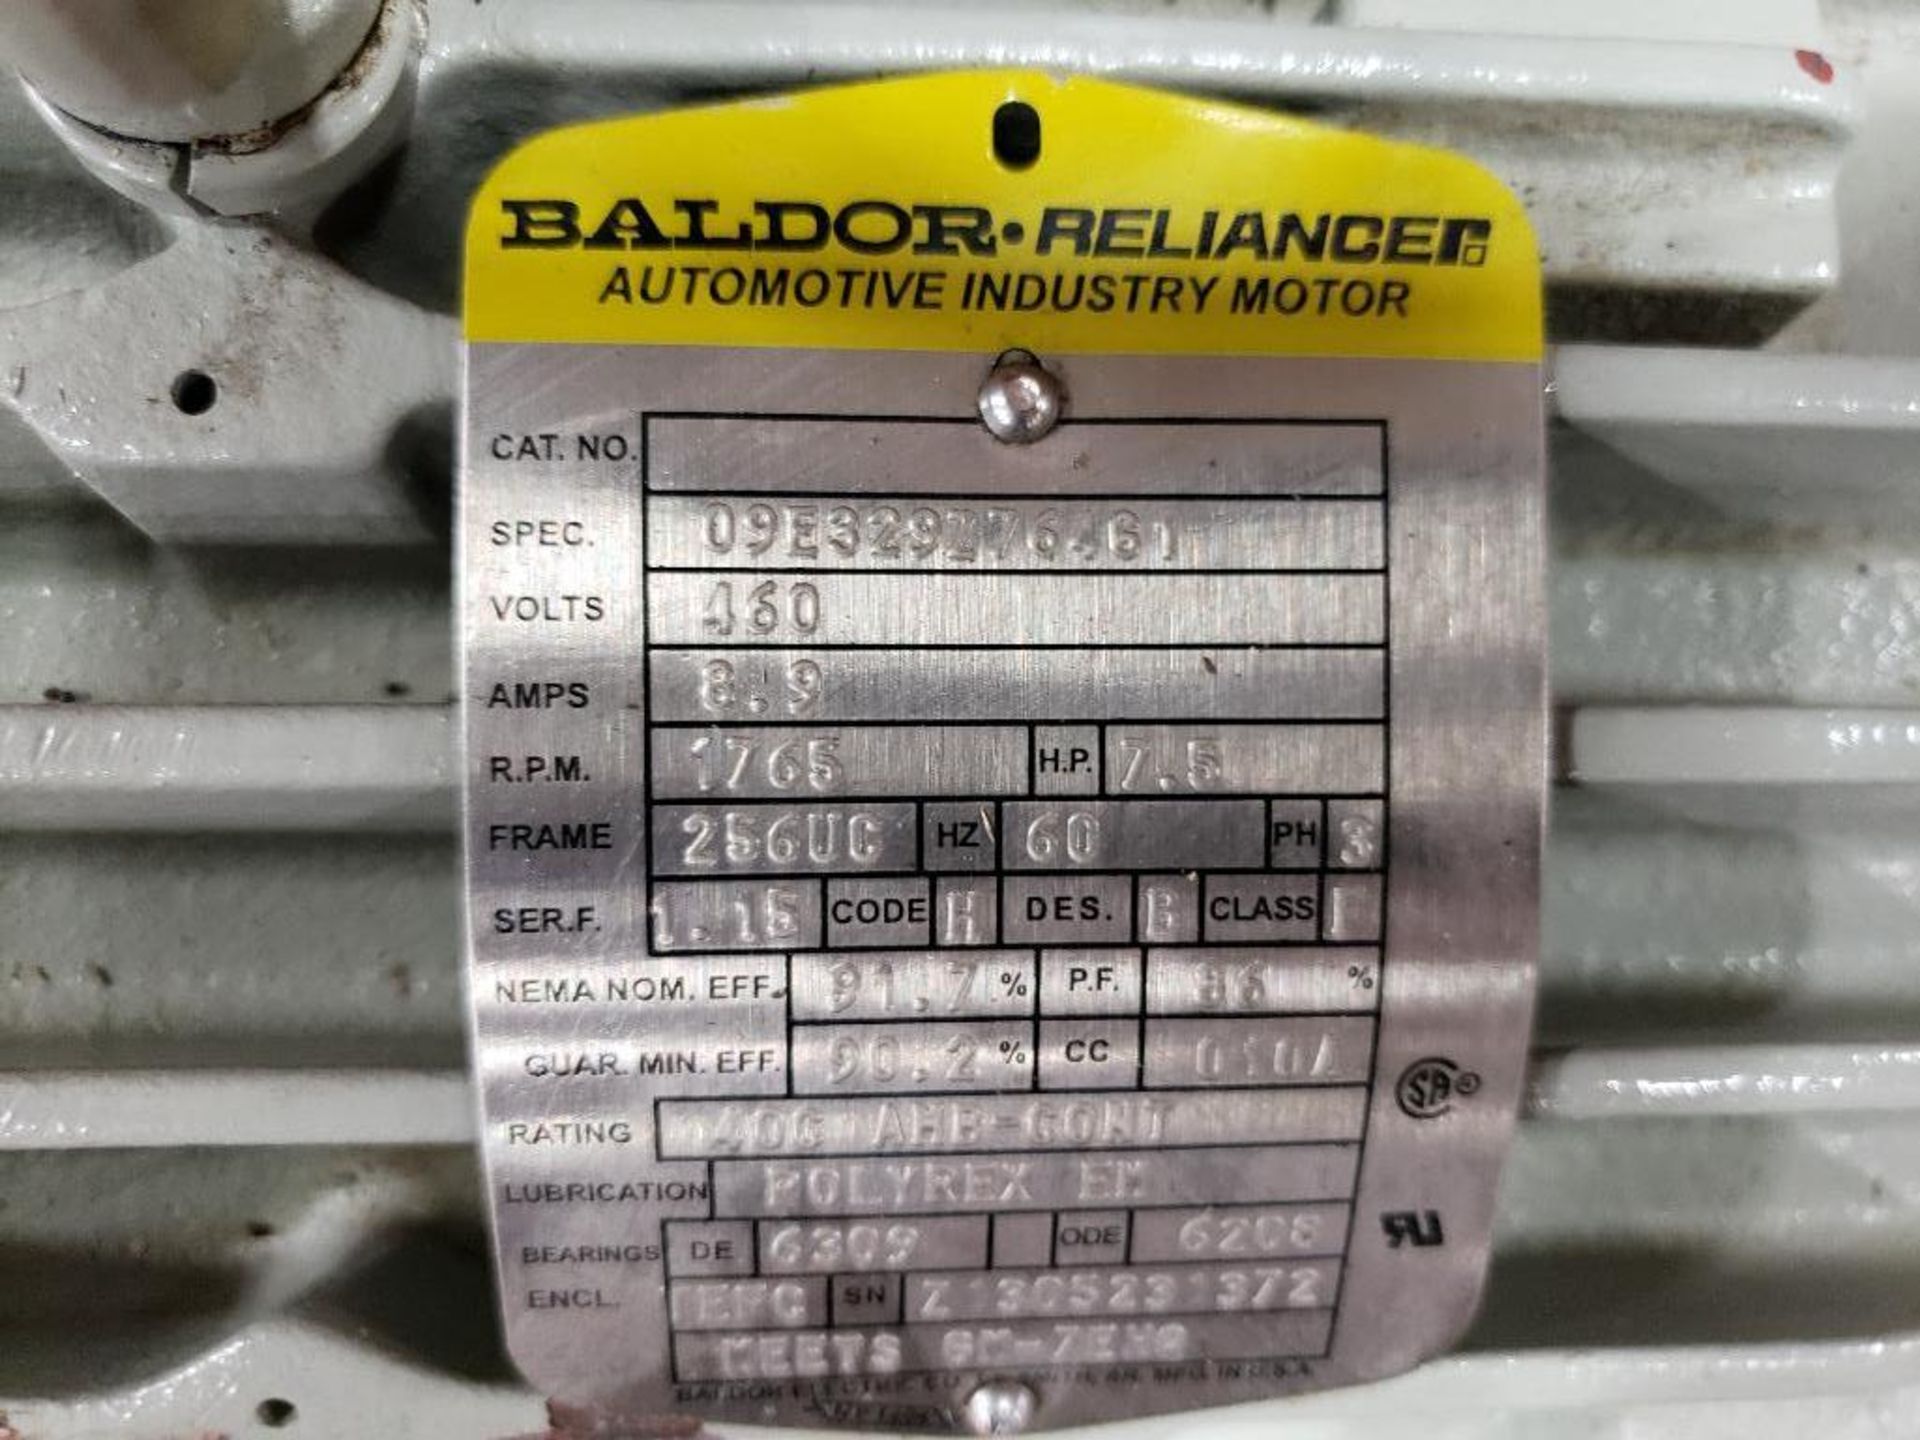 7.5HP Baldor Reliance automotive industry motor 09E329Z764G1. 3PH, 460V, 1765RPM, 256UC-Frame. - Image 5 of 6